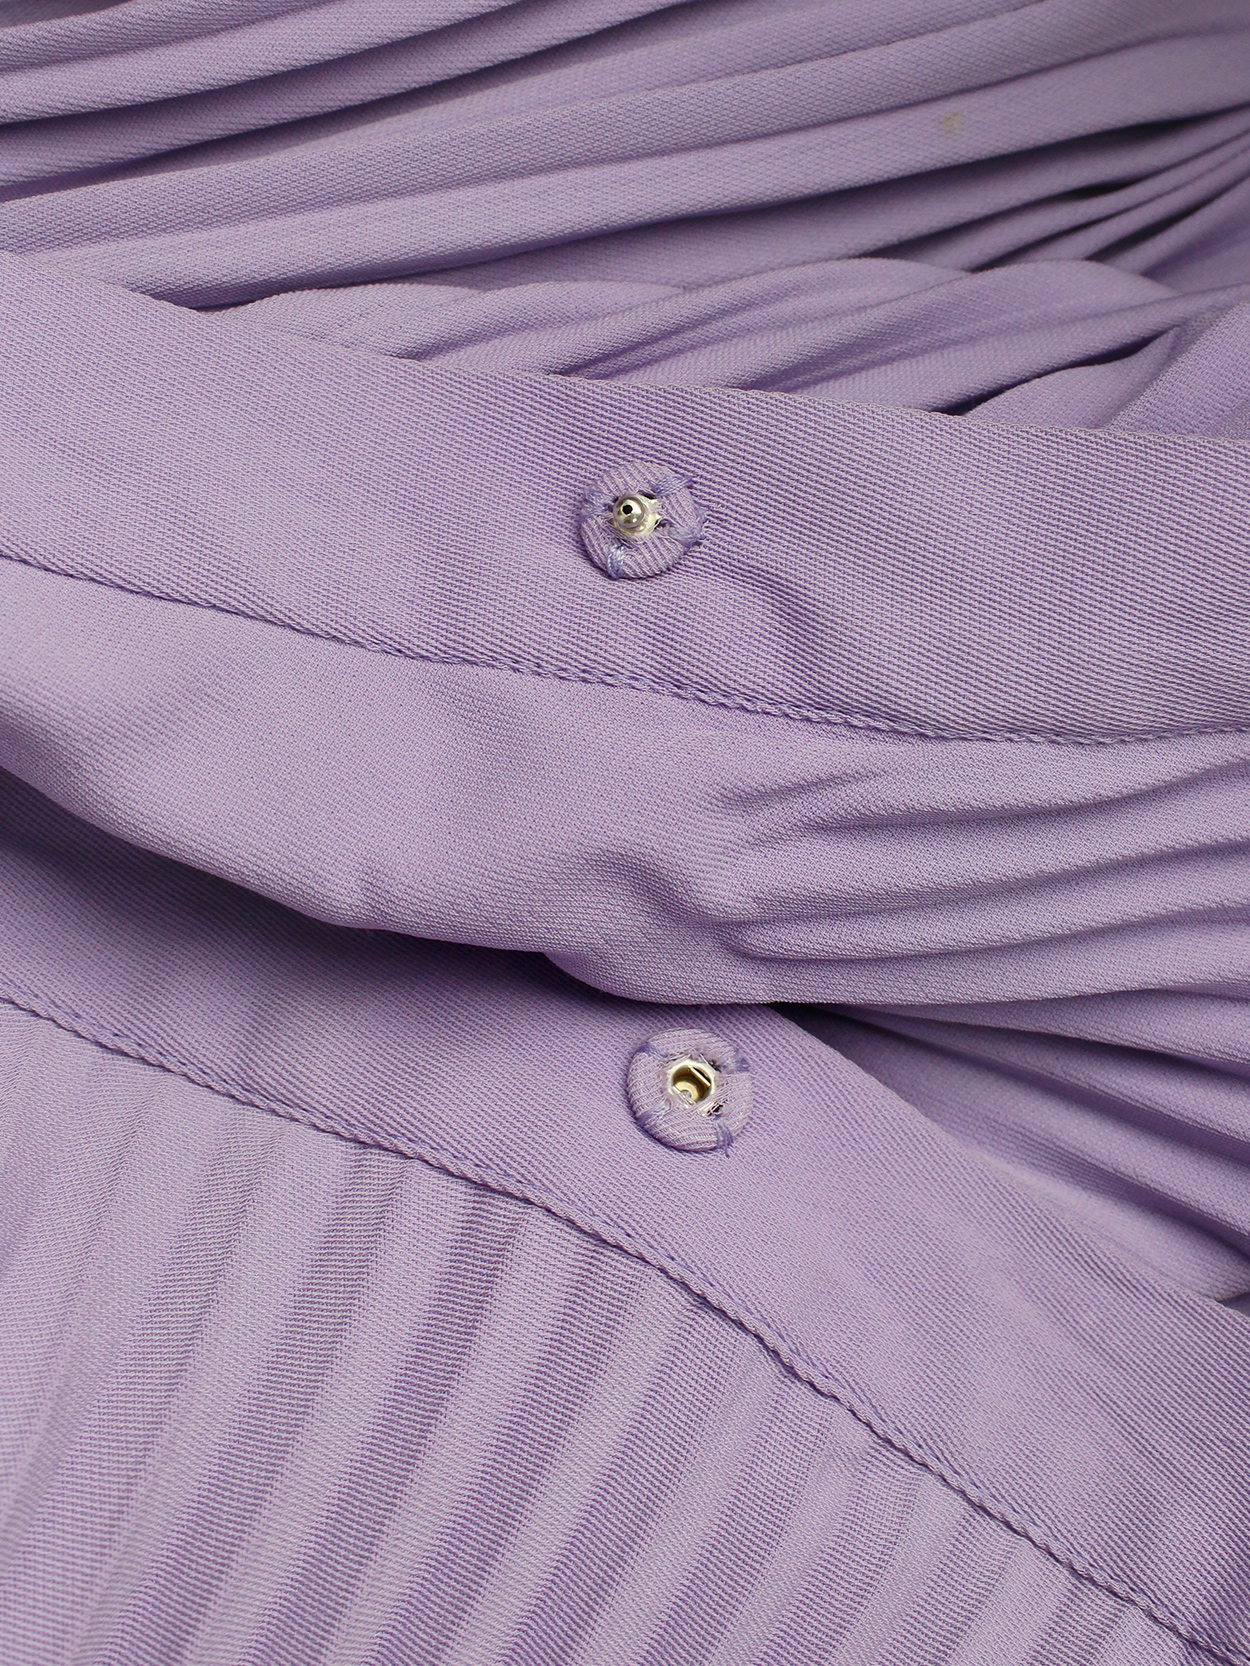 af Vandevorst purple draped backless dress with accordeon pleats spring 2008 (6)